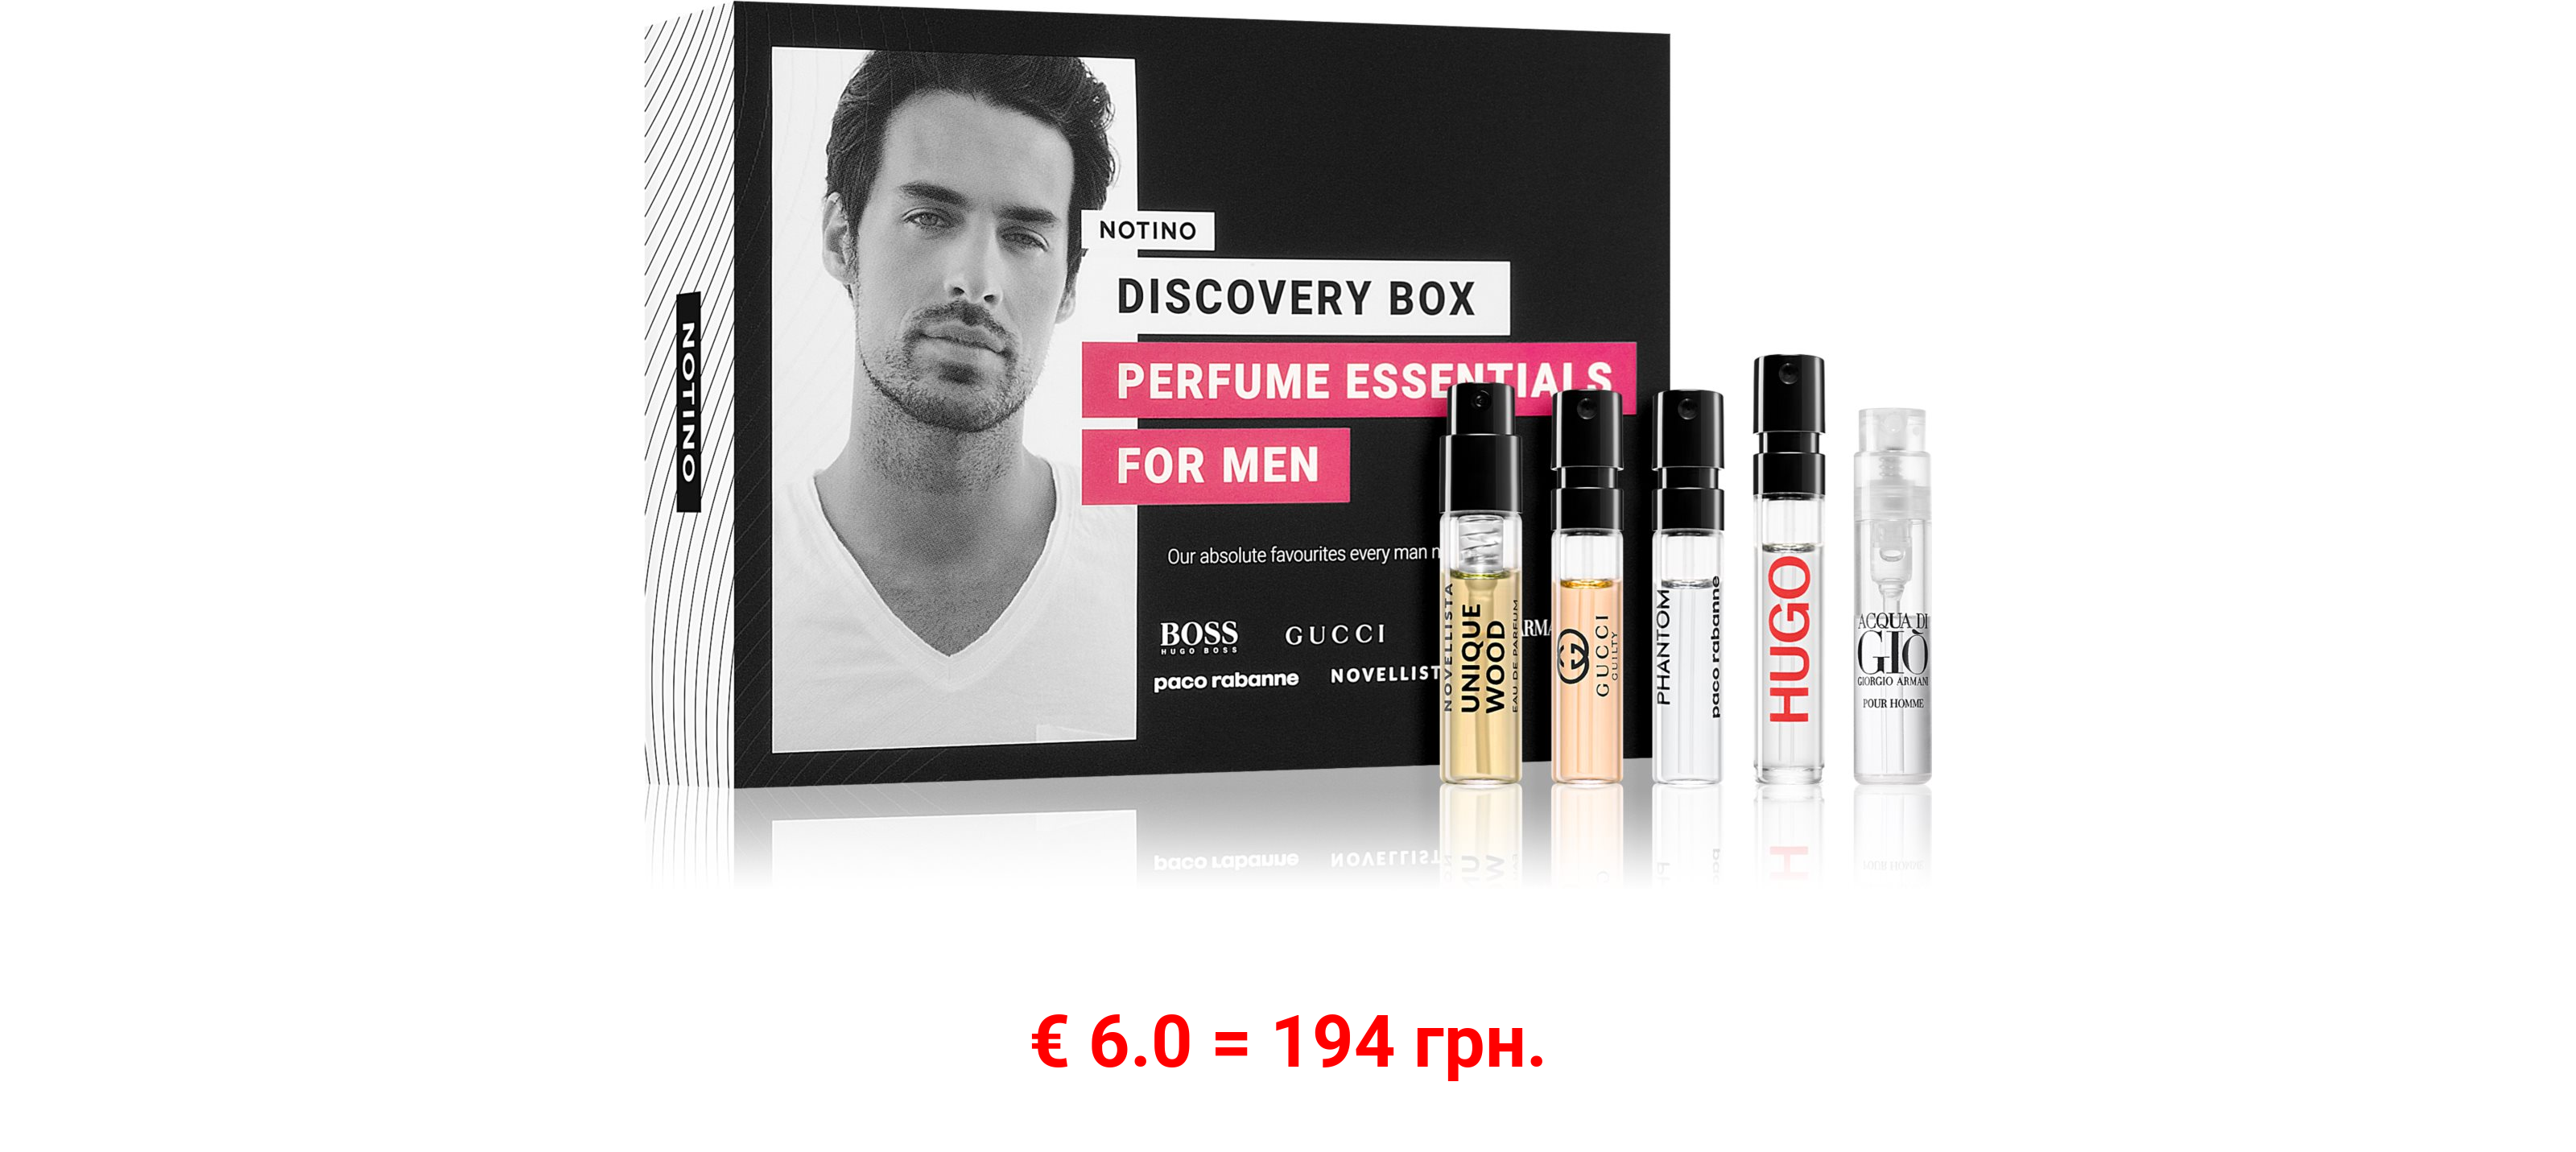 Discovery Box Notino Perfume Essentials for Men